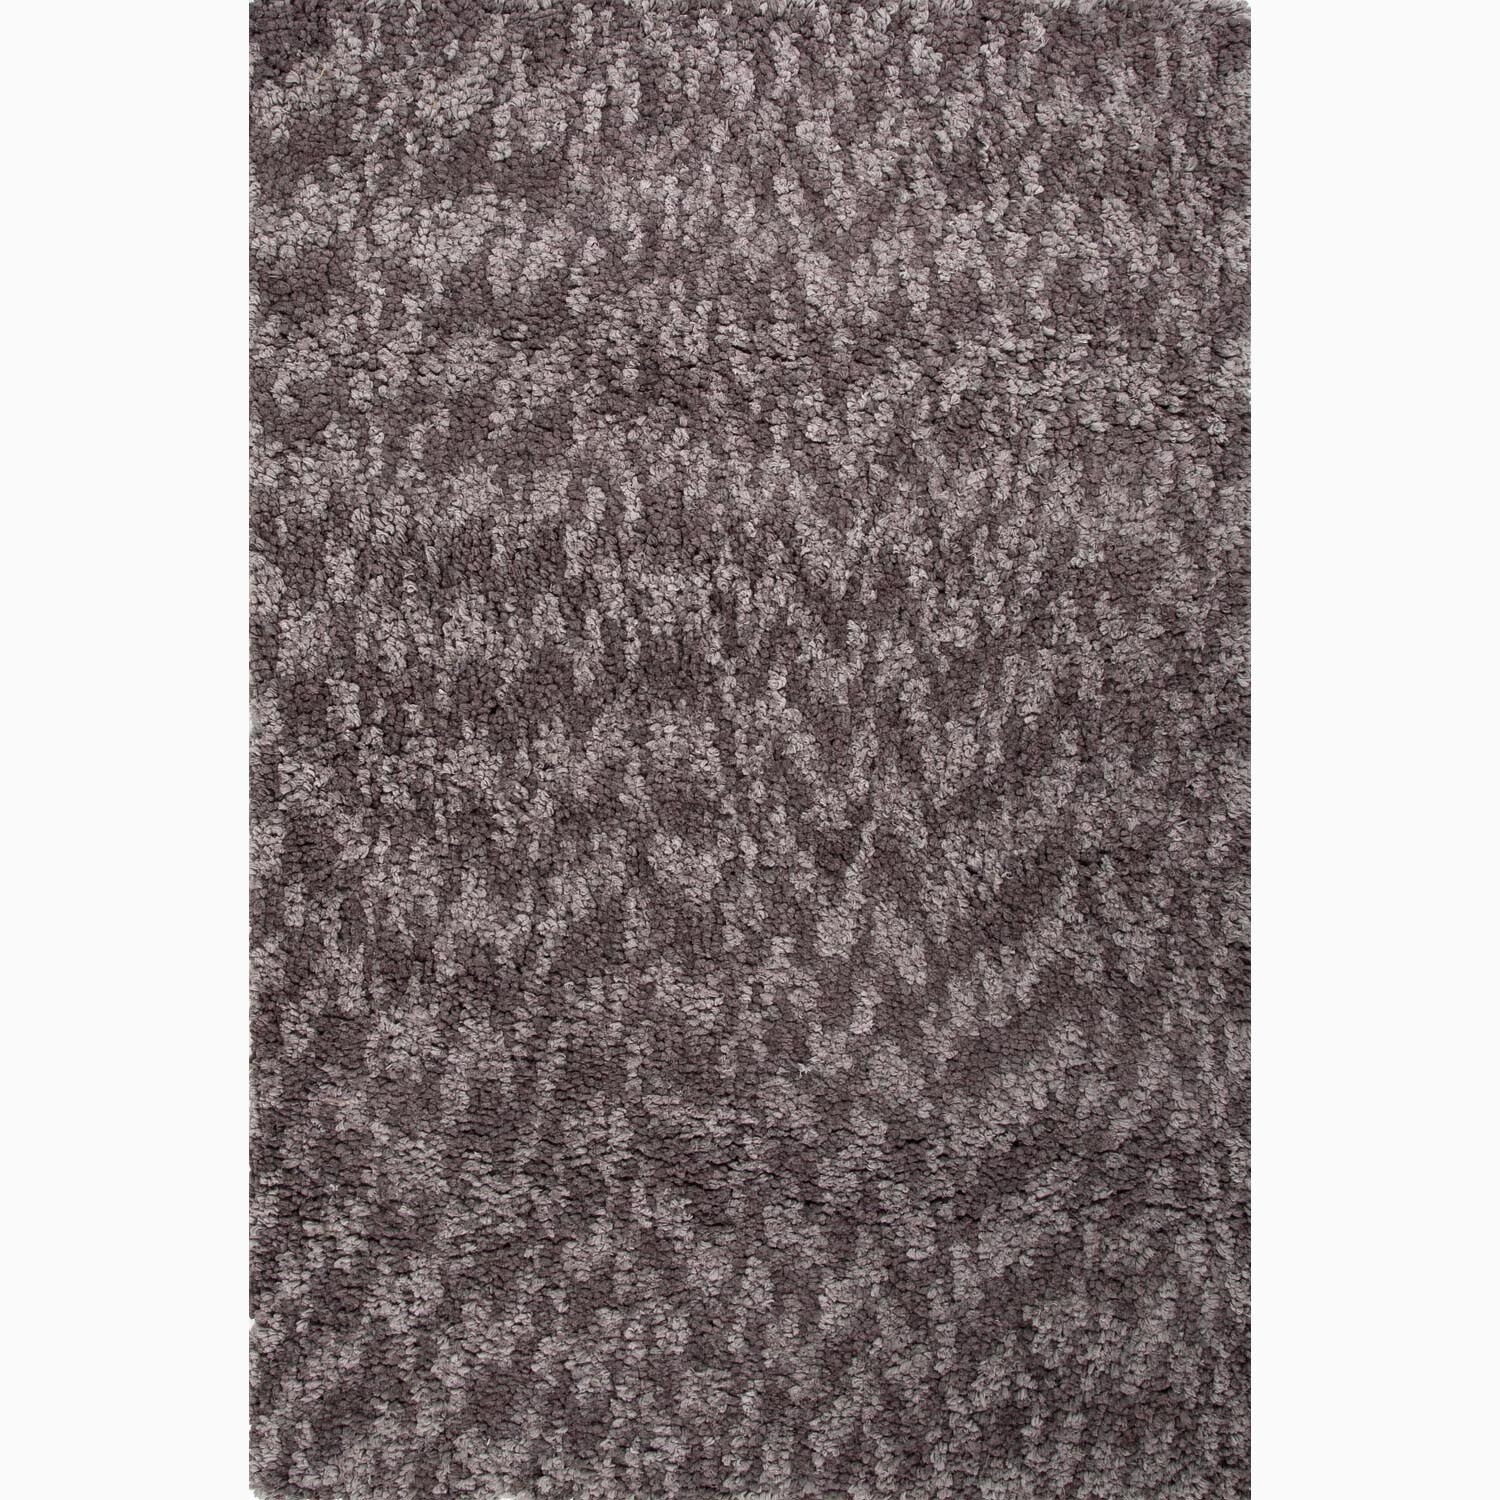 Hand made Gray/ Brown Polyester Ultra Plush Rug (5x8)